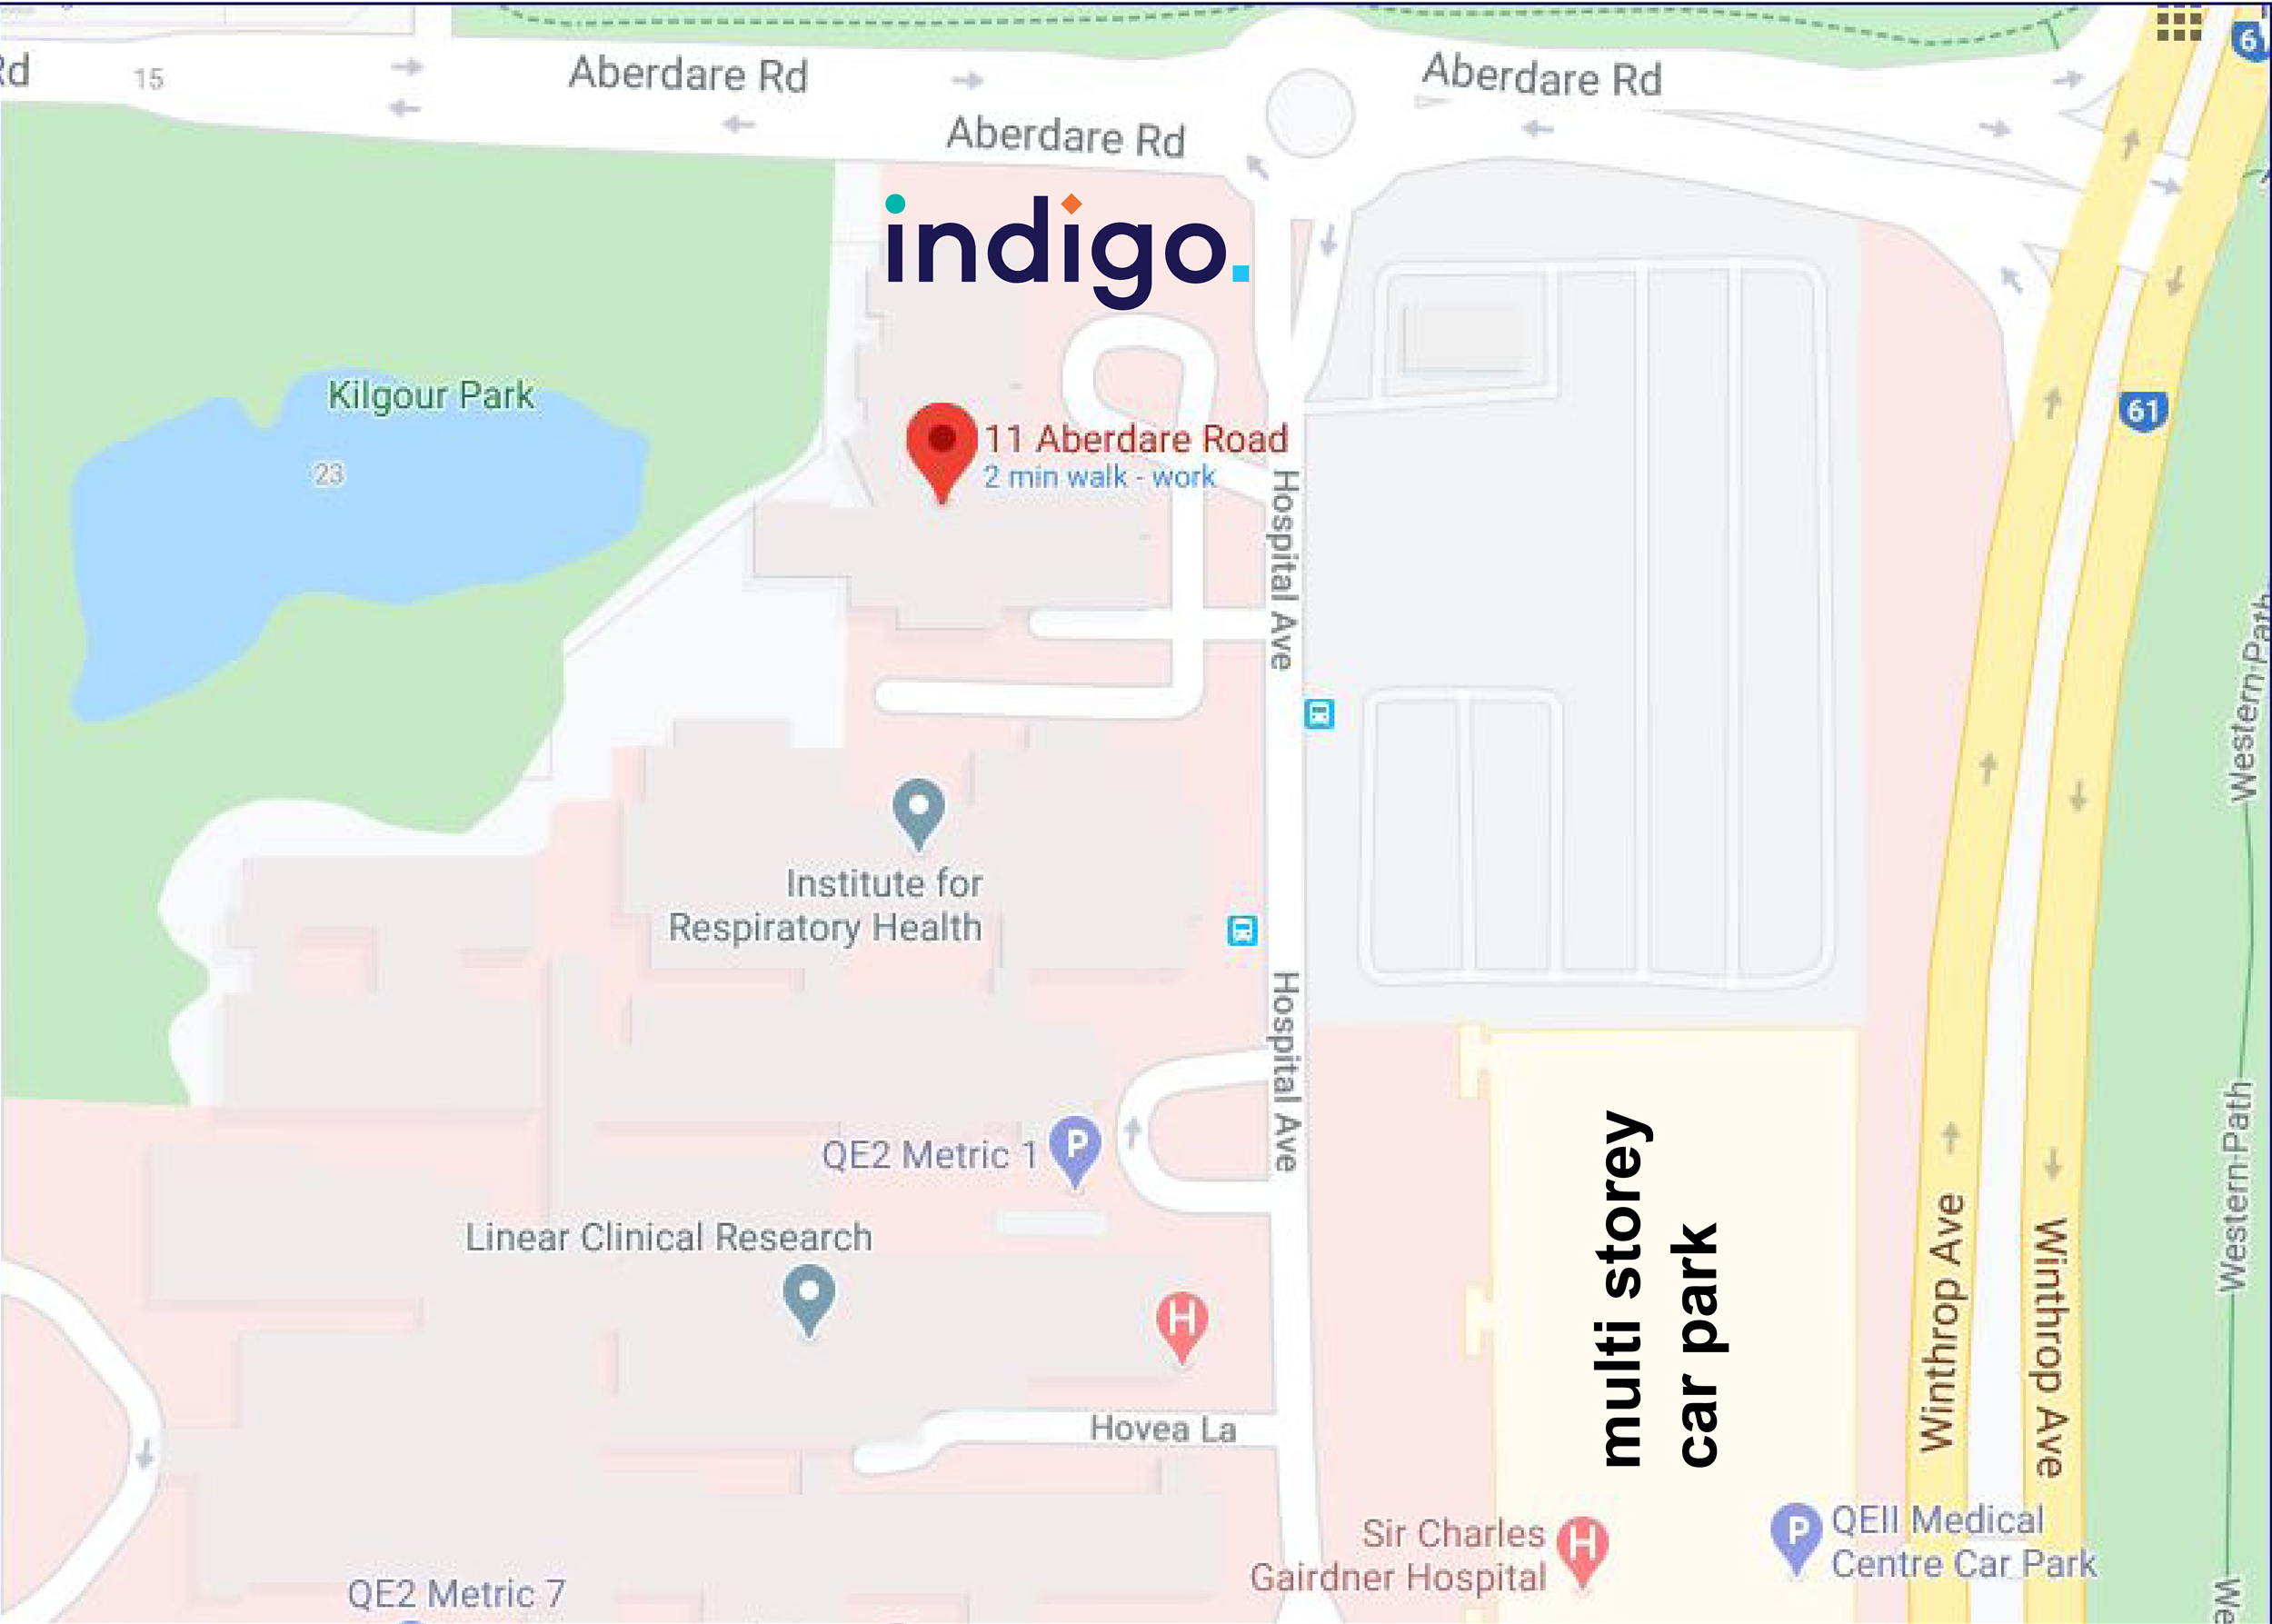 Google maps snippet of Indigo location and carpark